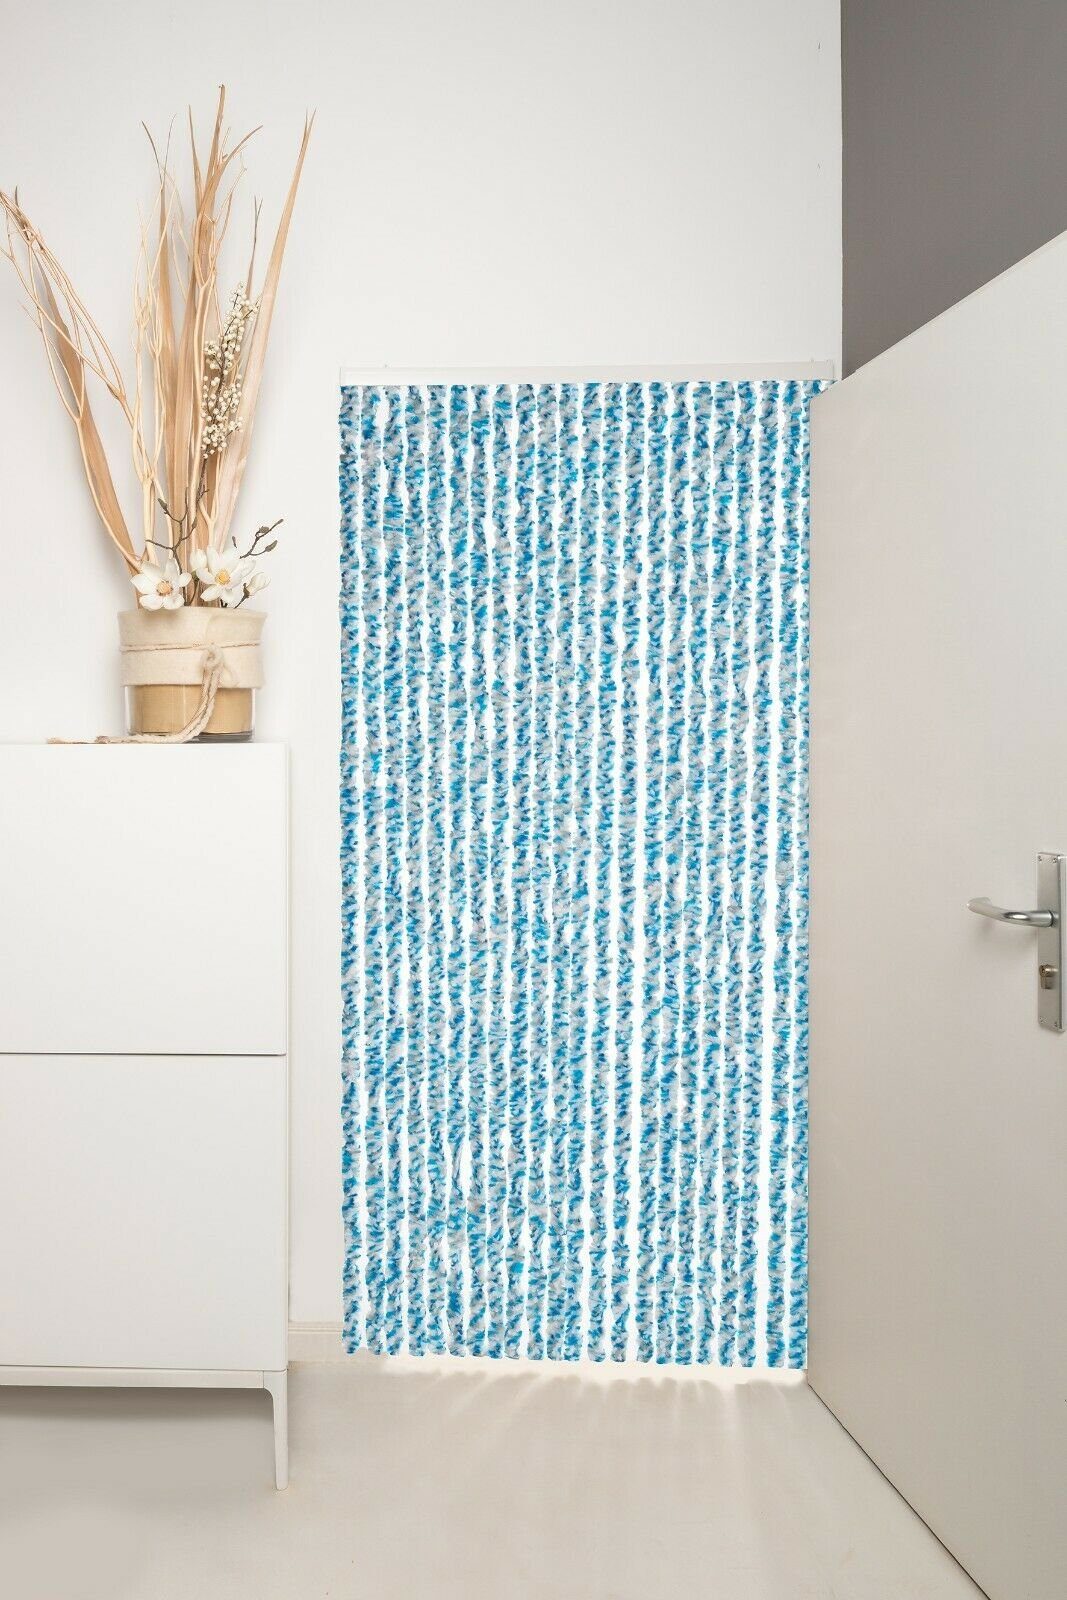 Defactoshop Insektenschutz-Vorhang Türvorhang Flauschvorhang Fliegenschutz Blau/Weiß 100x200cm